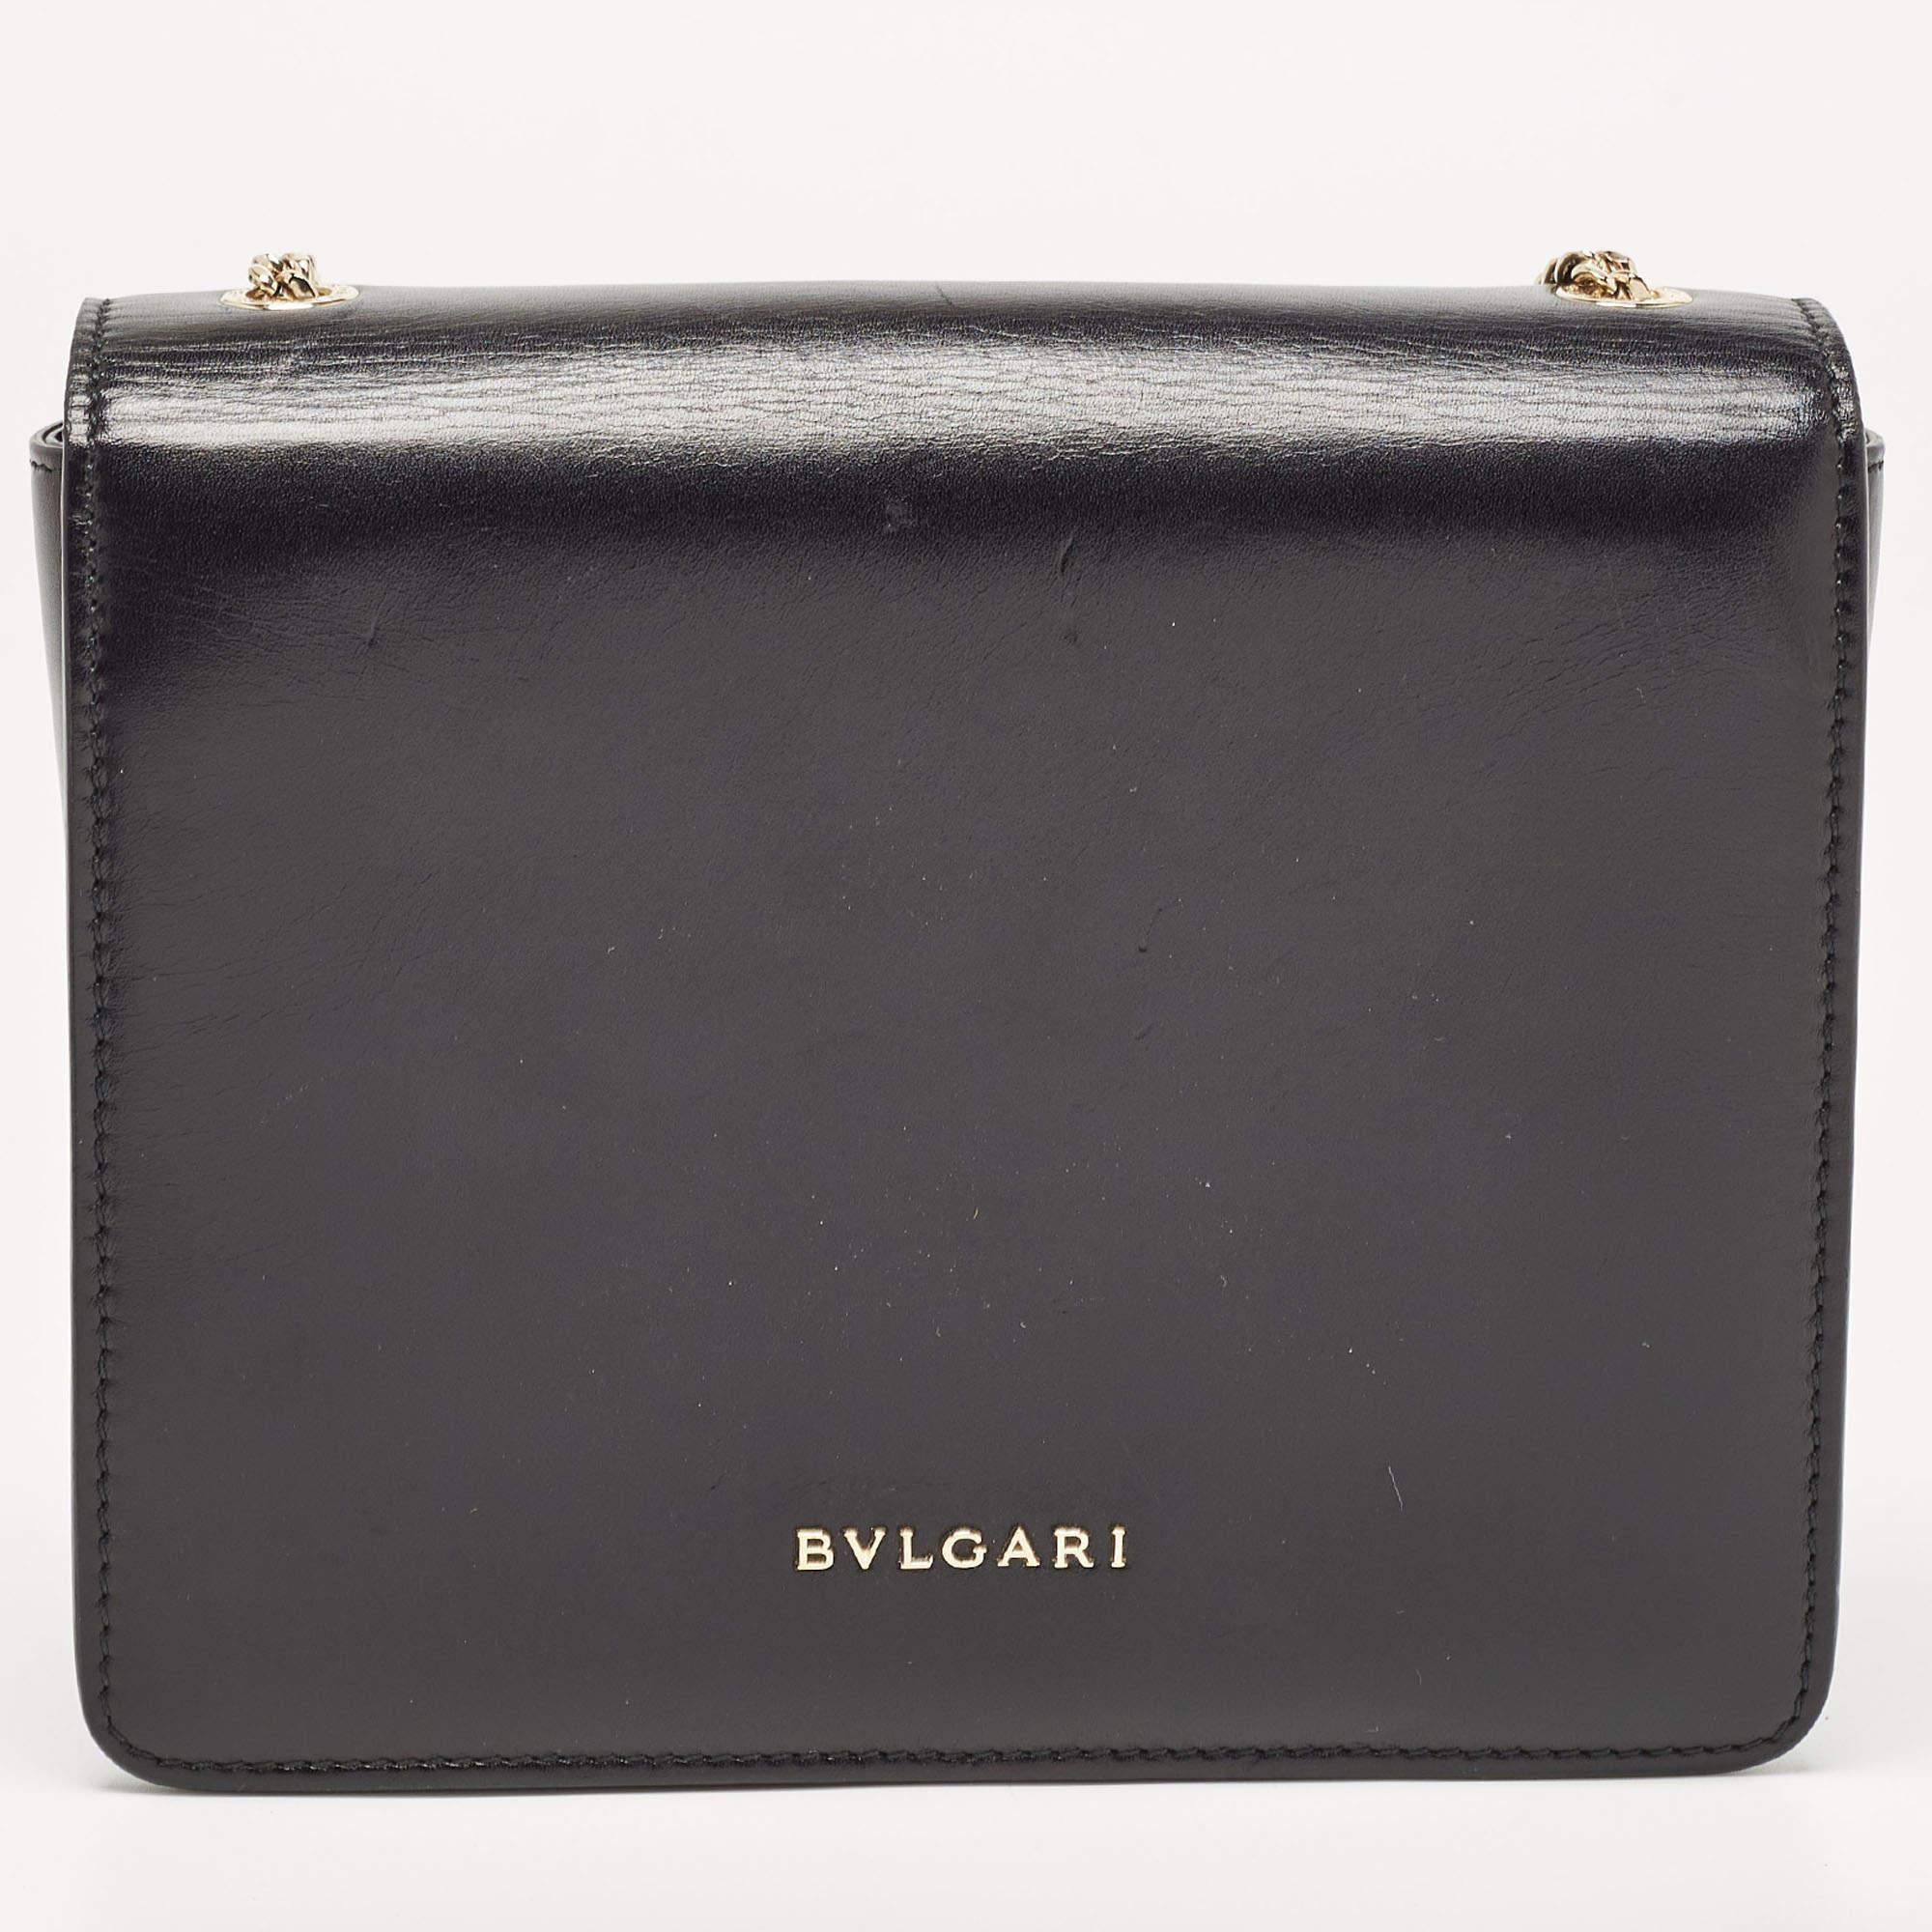 Bvlgari Black Leather and Perspex Small Flap Cover Shoulder Bag 11